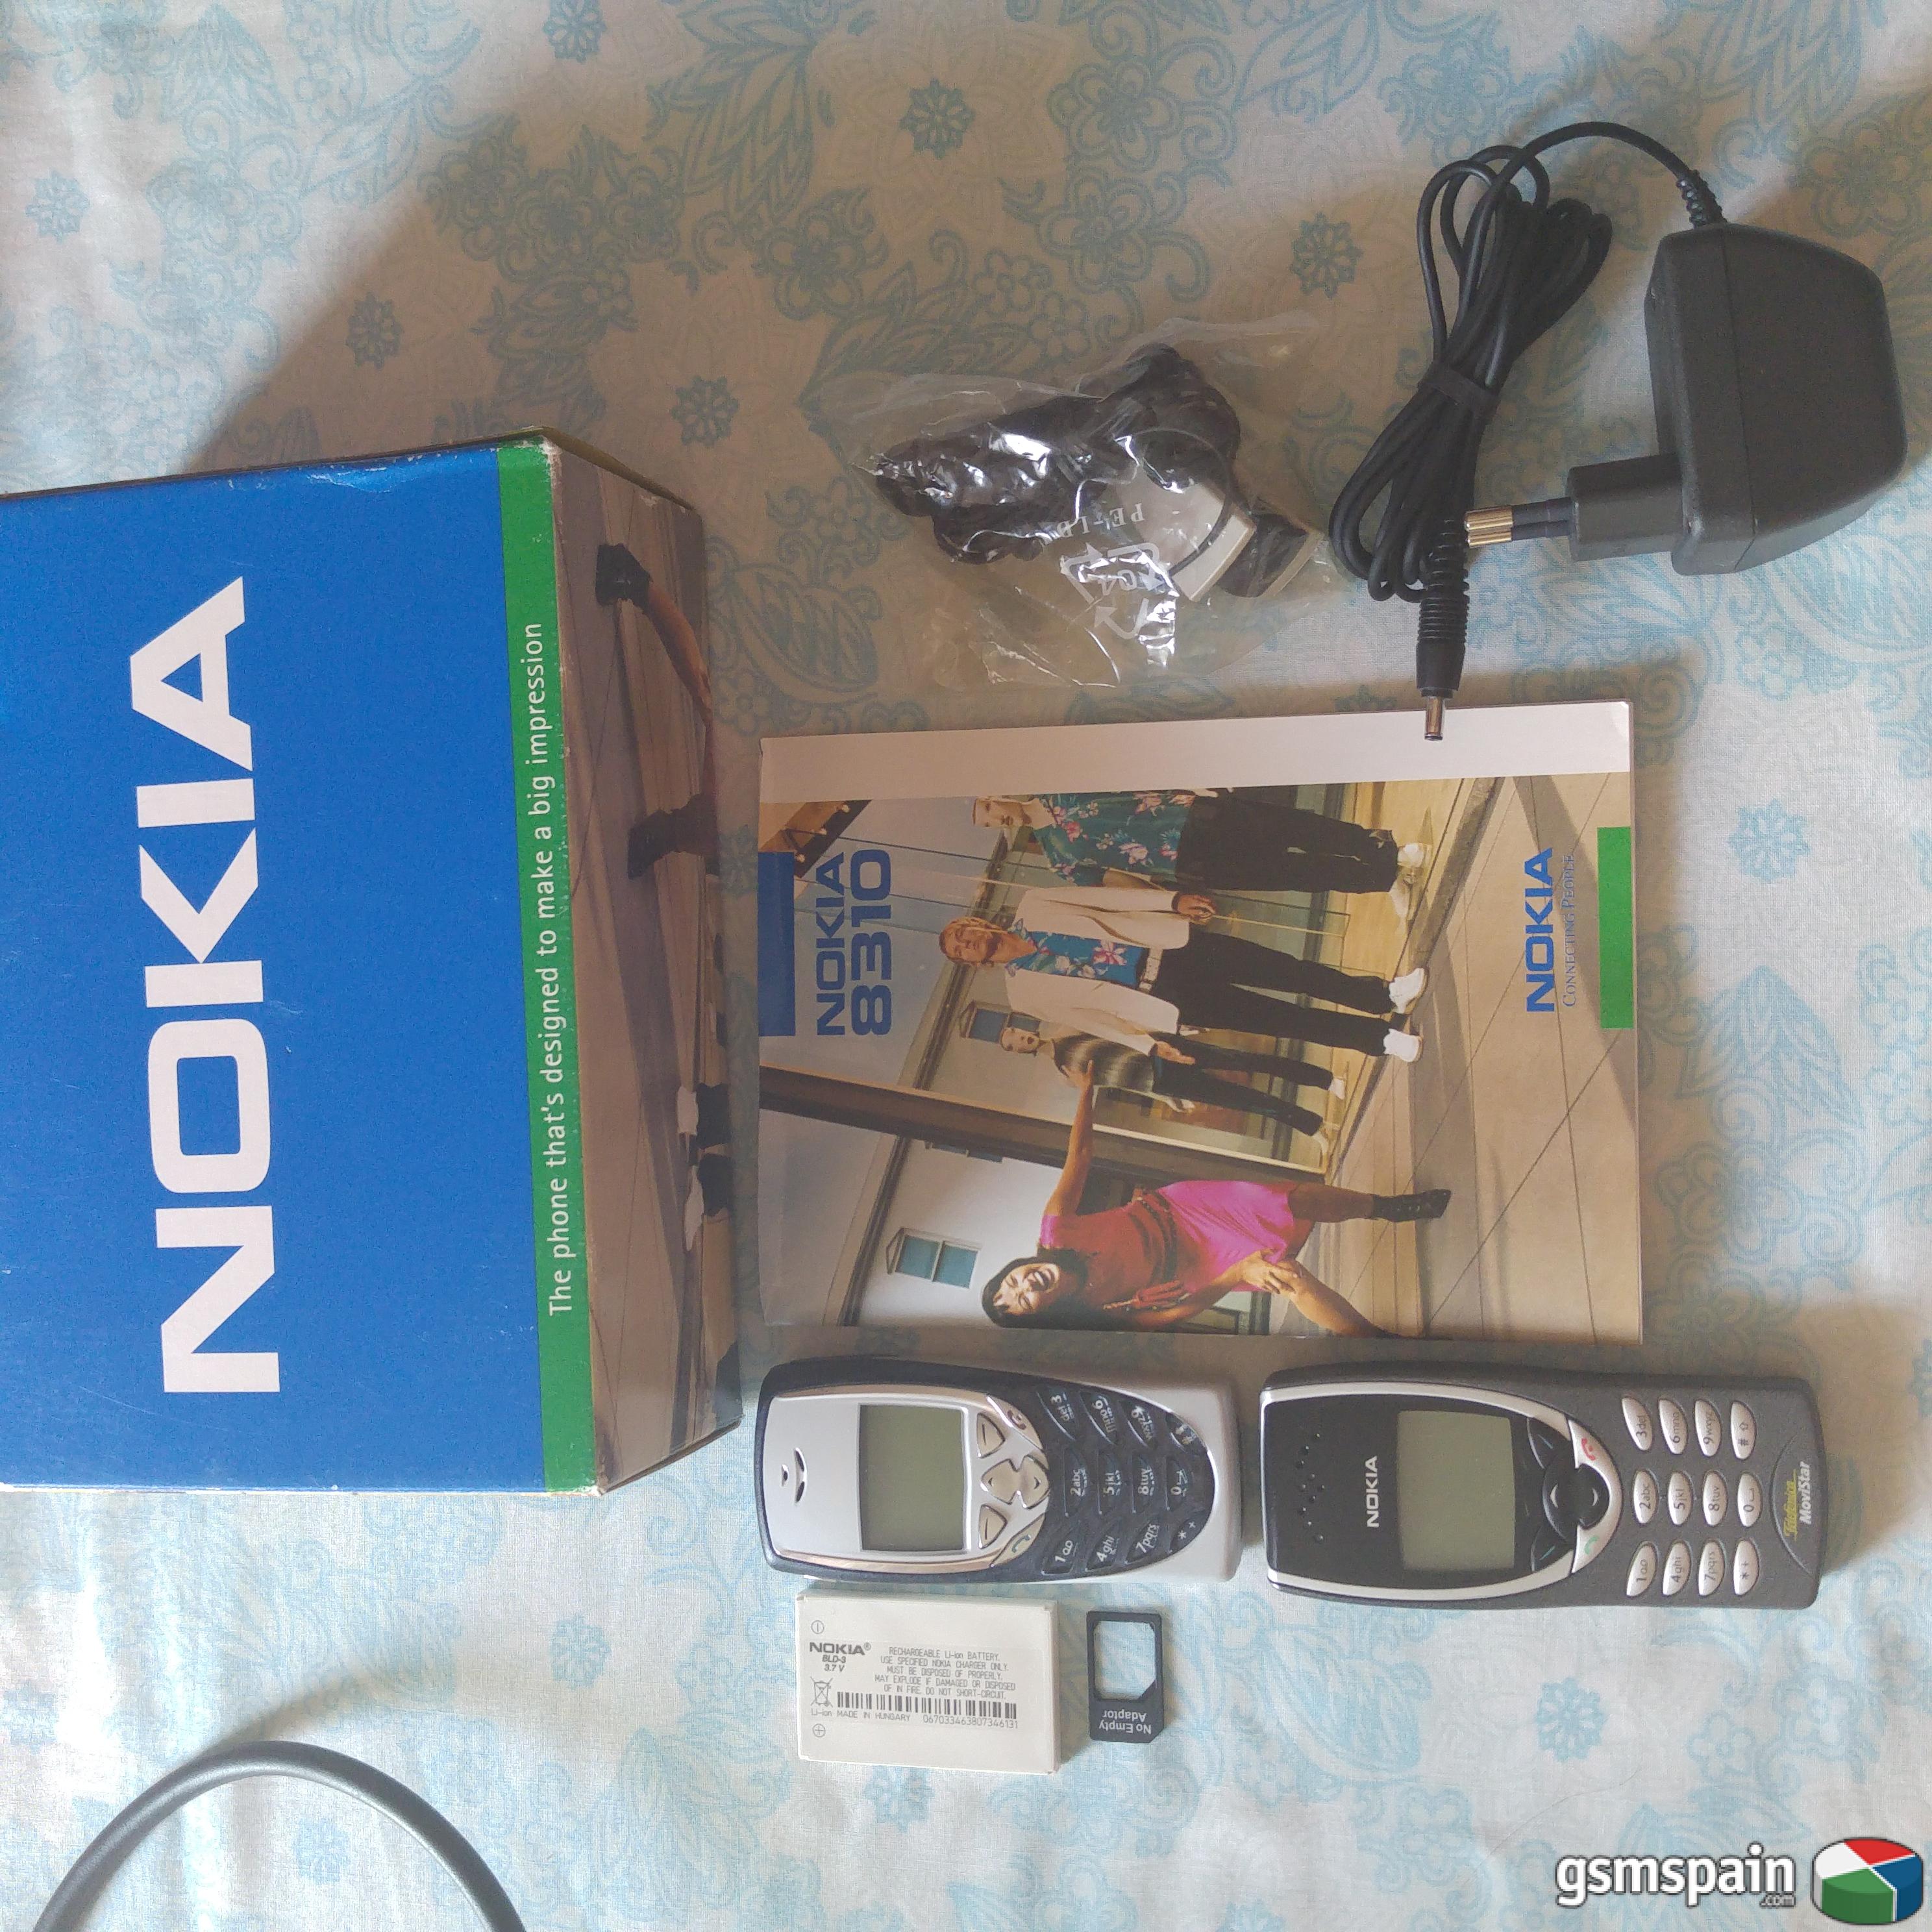 [VENDO] Nokia 8310 libre origen a estrenar!!!!